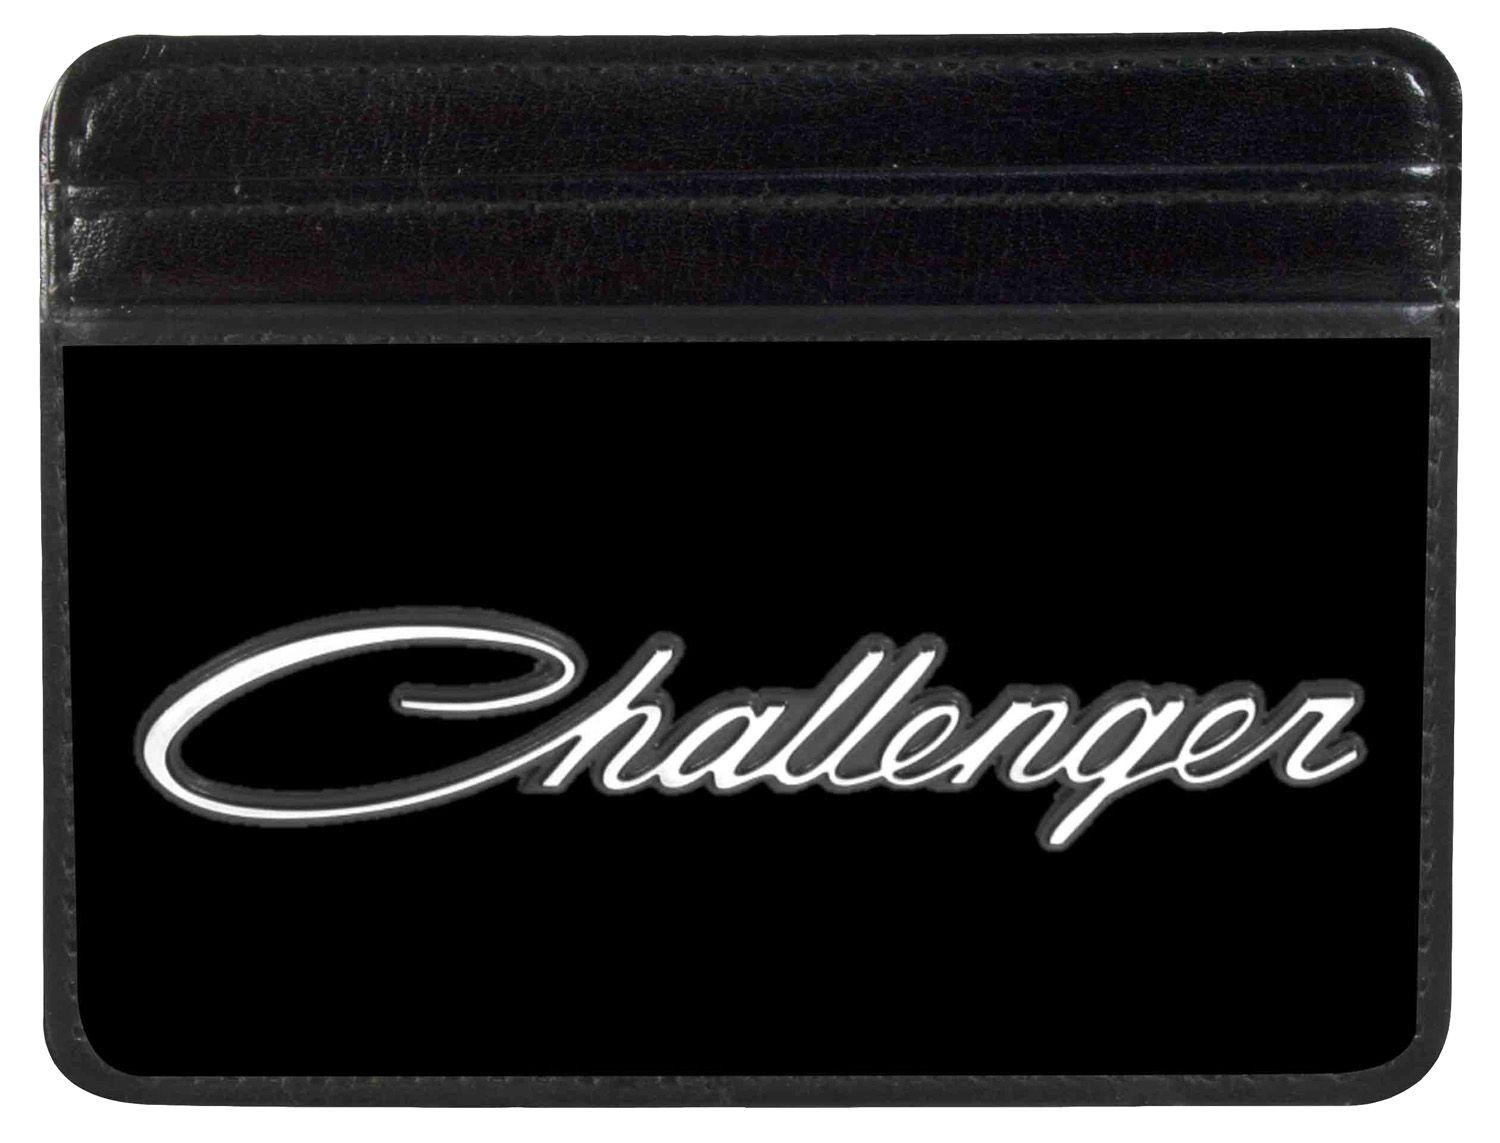 Dodge Car Company Logo - Dodge Automobile Company Cursive Challenger Logo Weekend Wallet